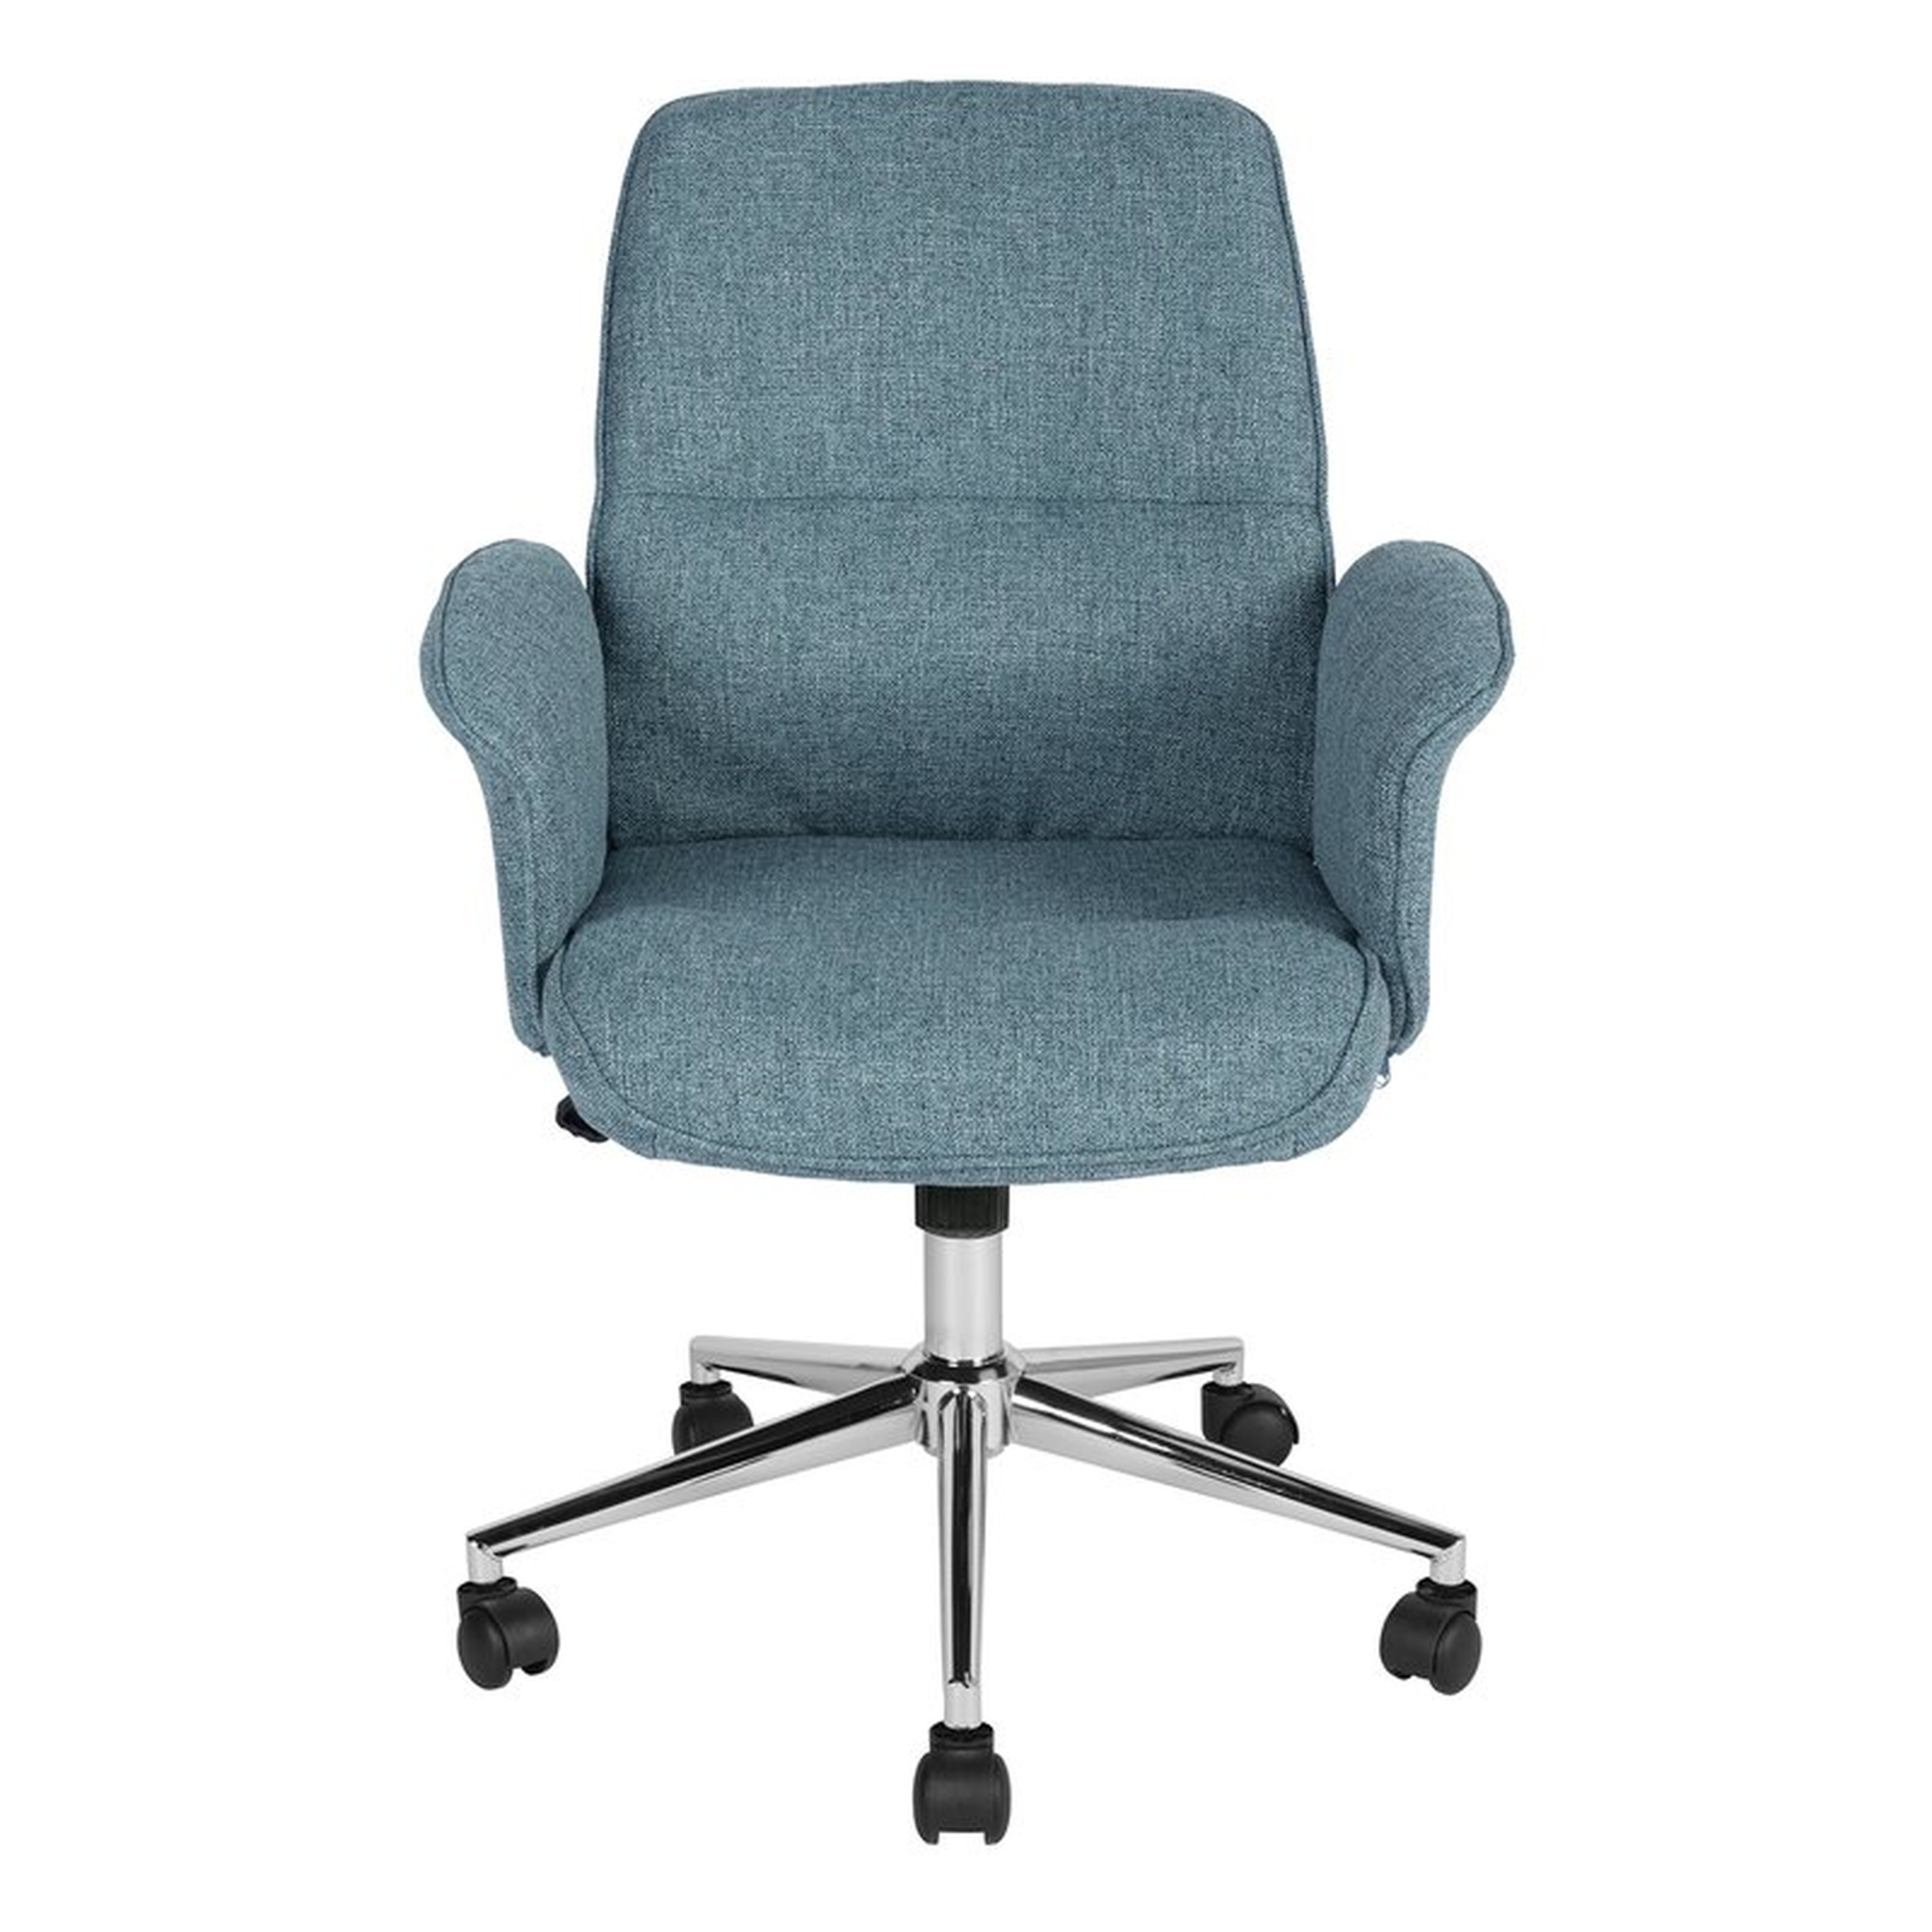 Ebern Designs: Bemot Task Chair - Wayfair